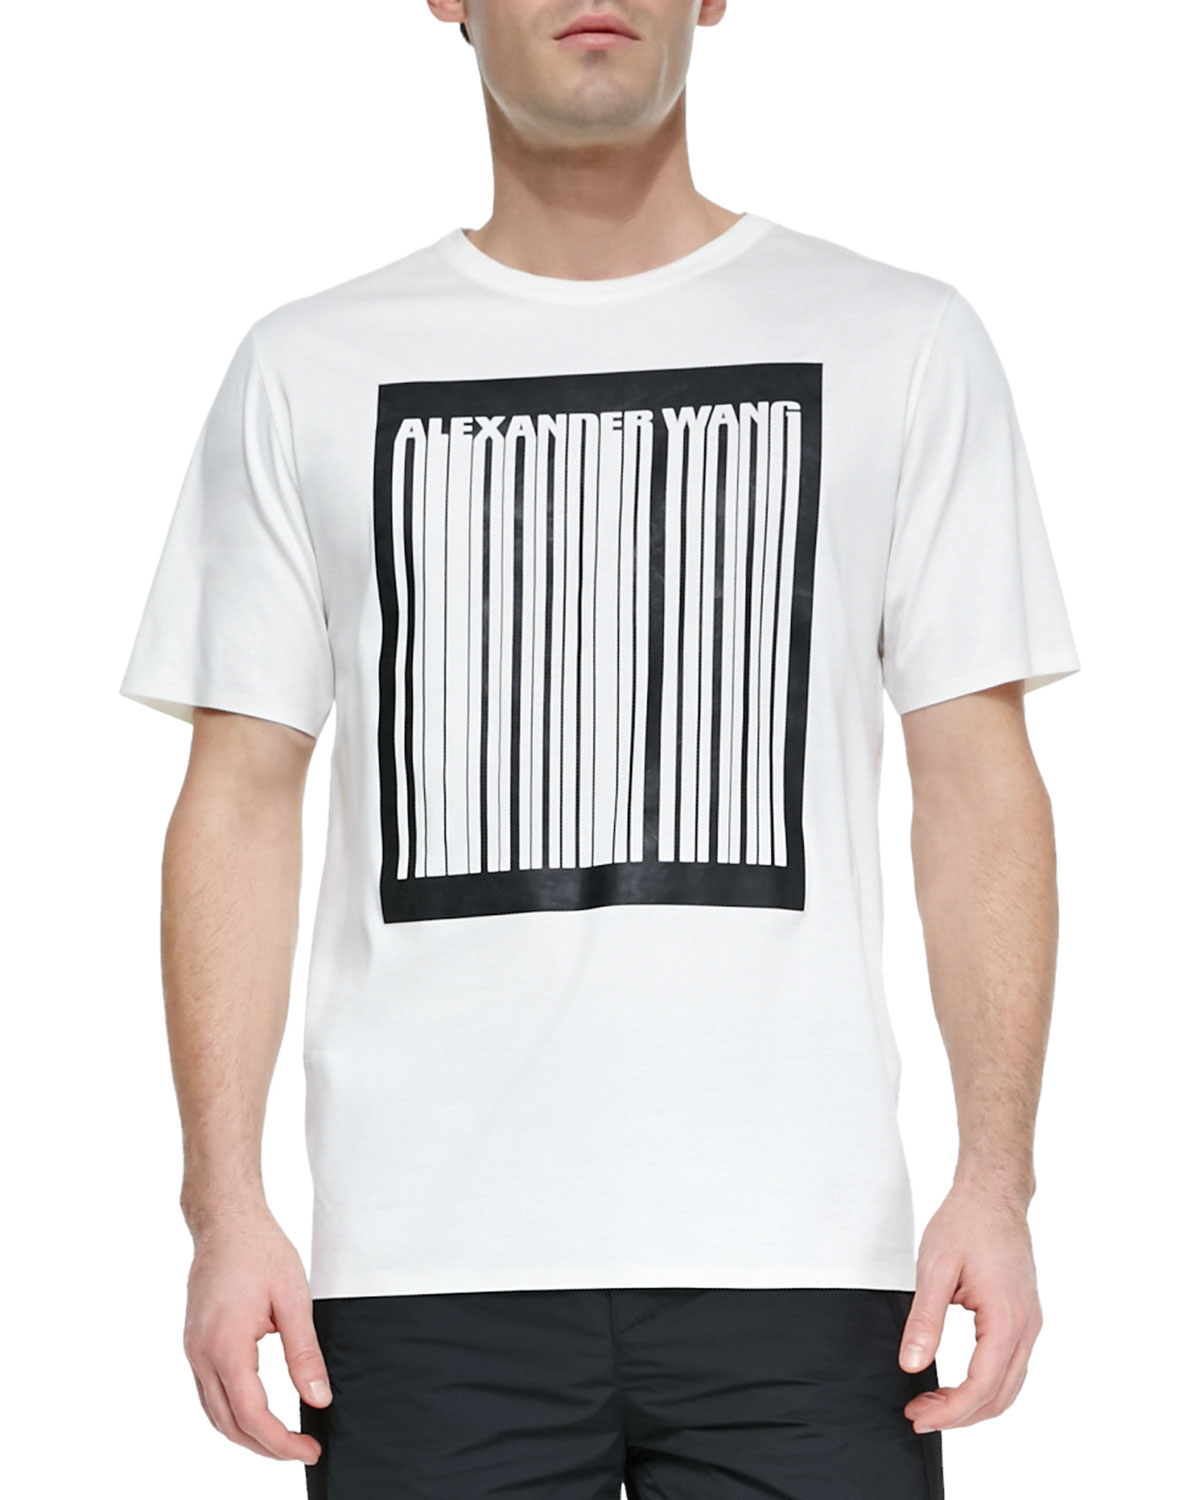 Bloodstained Utænkelig opladning alexander wang barcode shirt